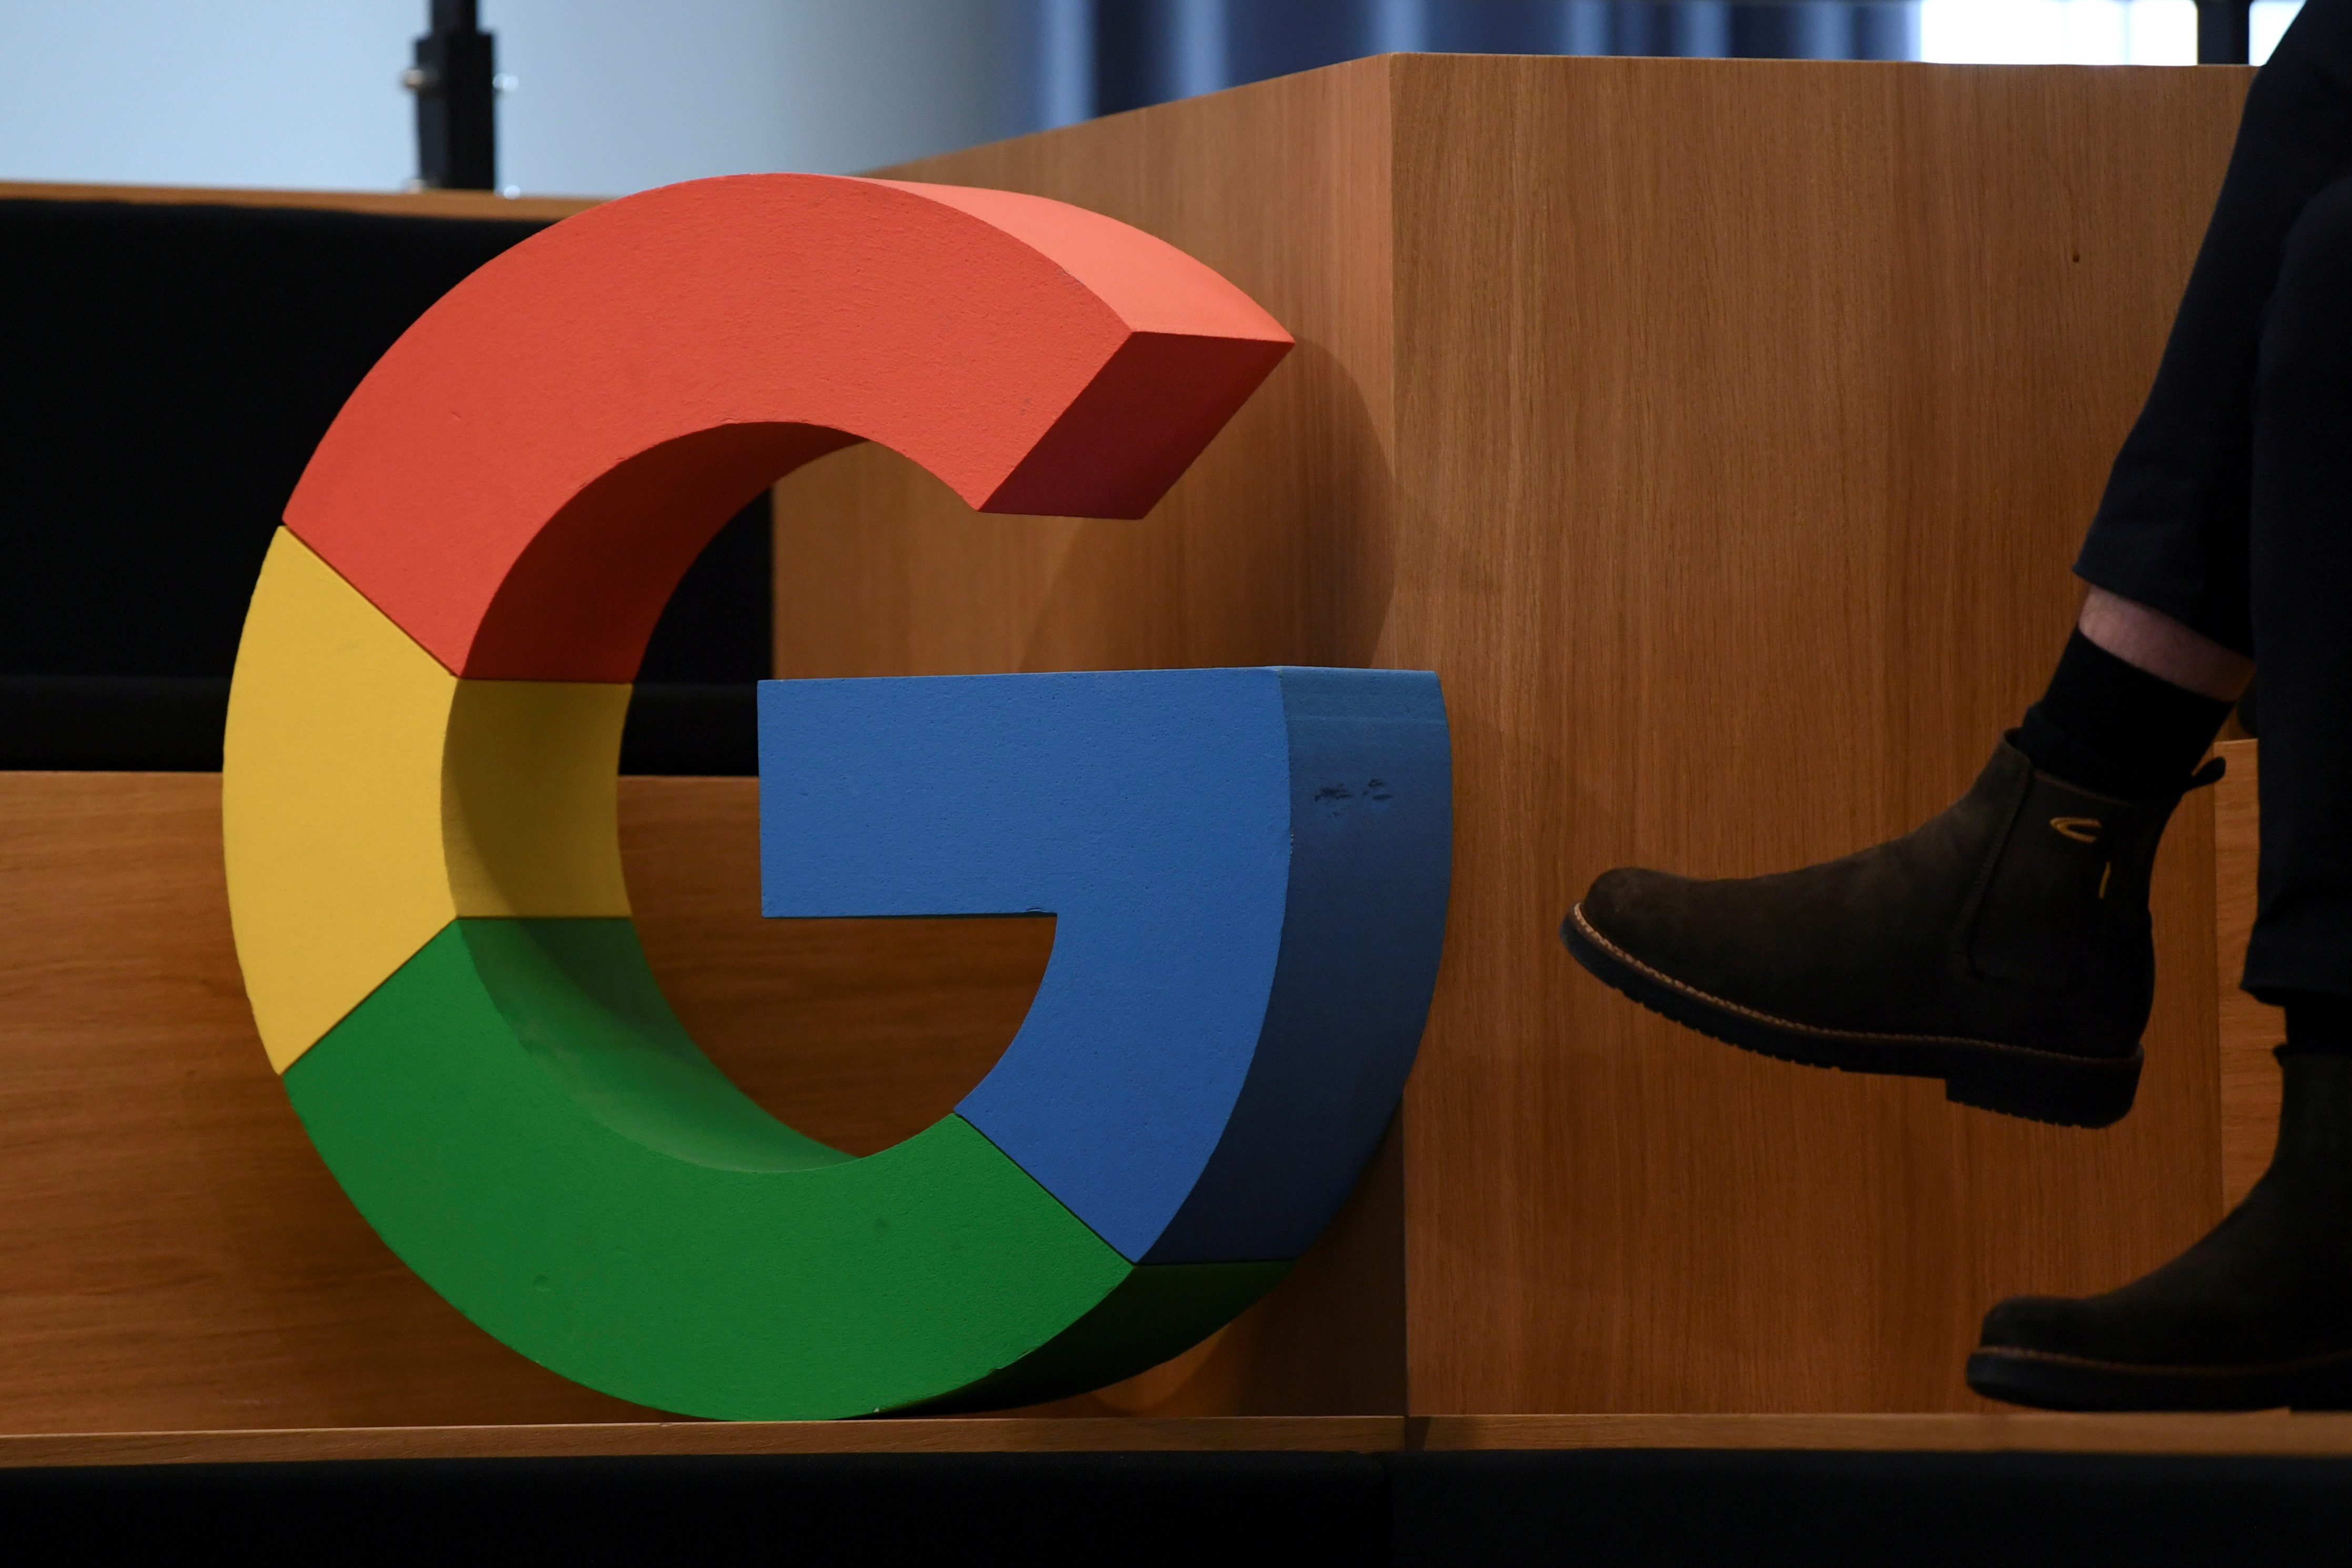 Google security official mocked gay staffer, lawsuit alleges